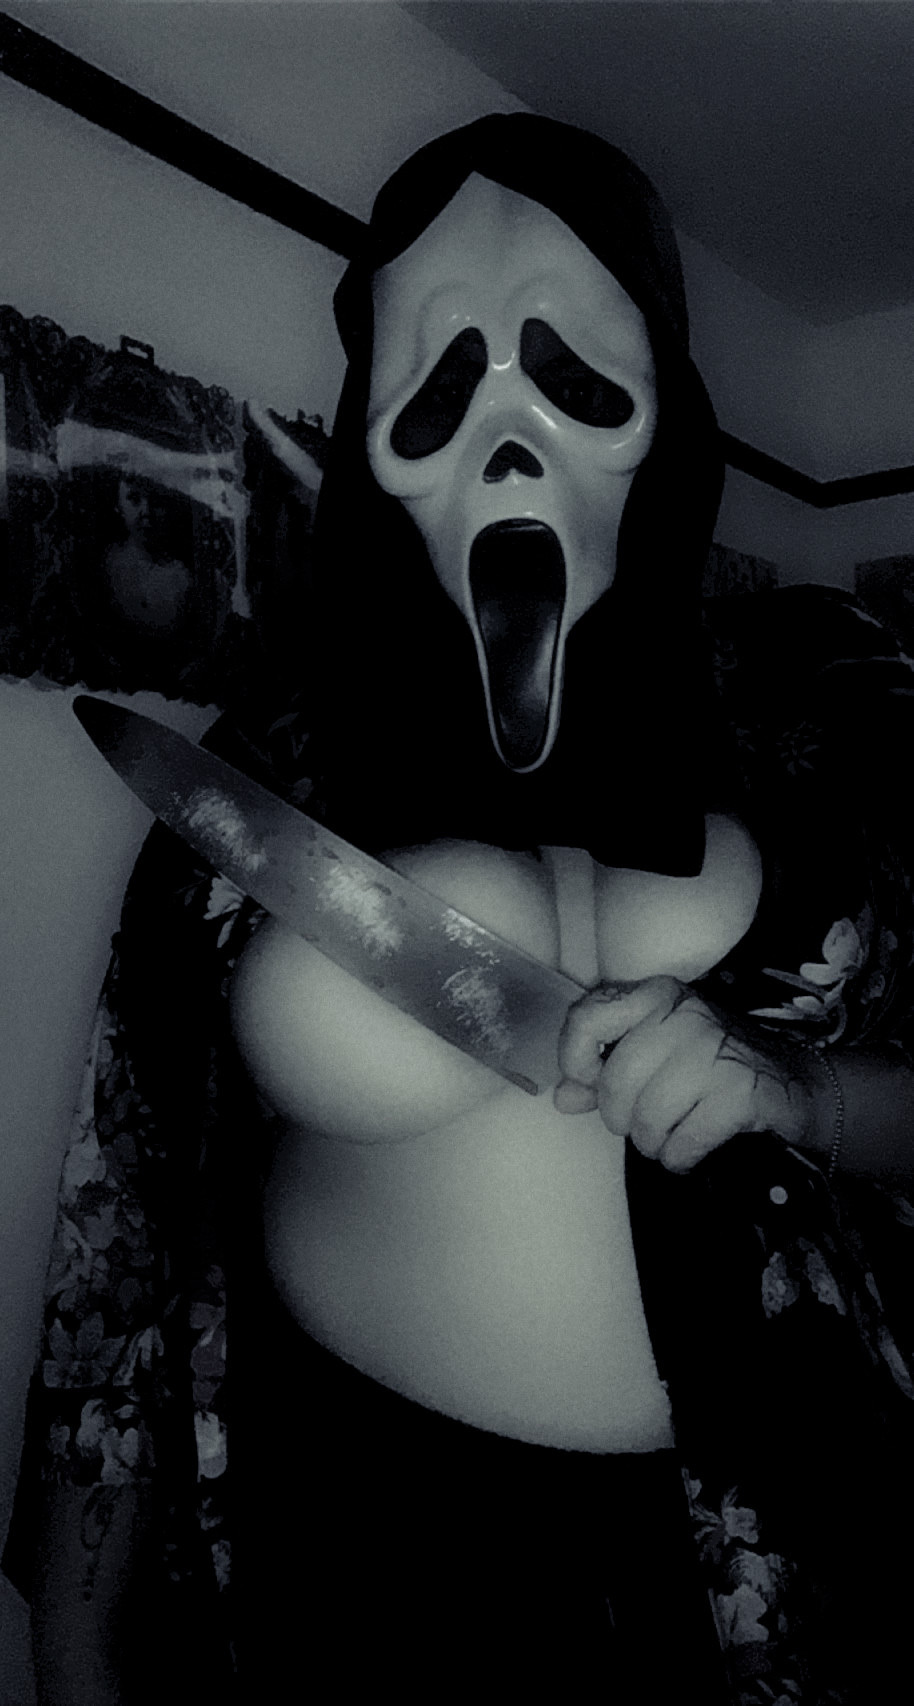 It's a SCREAM baby! #scream6 #screamvi #horrortok #horror #jakelubb #f